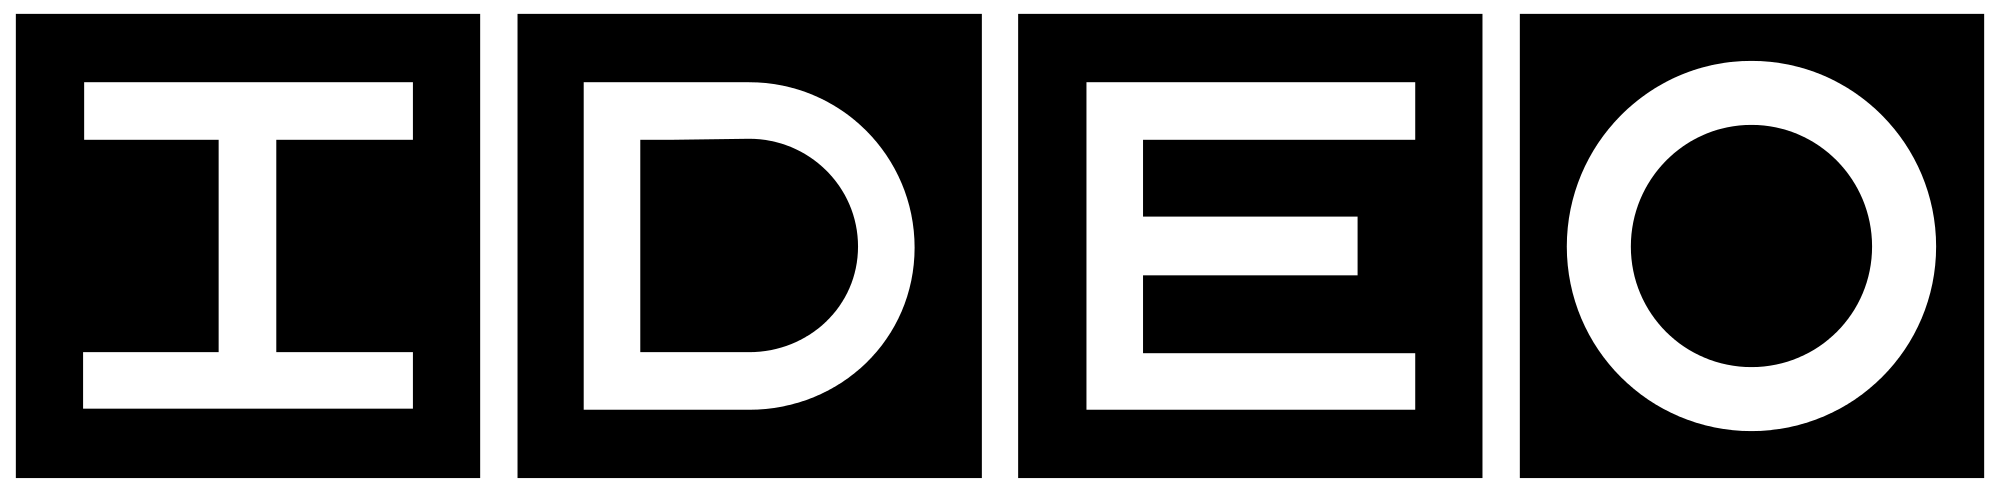 Ideo Logo - File:IDEO logo.svg - Wikimedia Commons